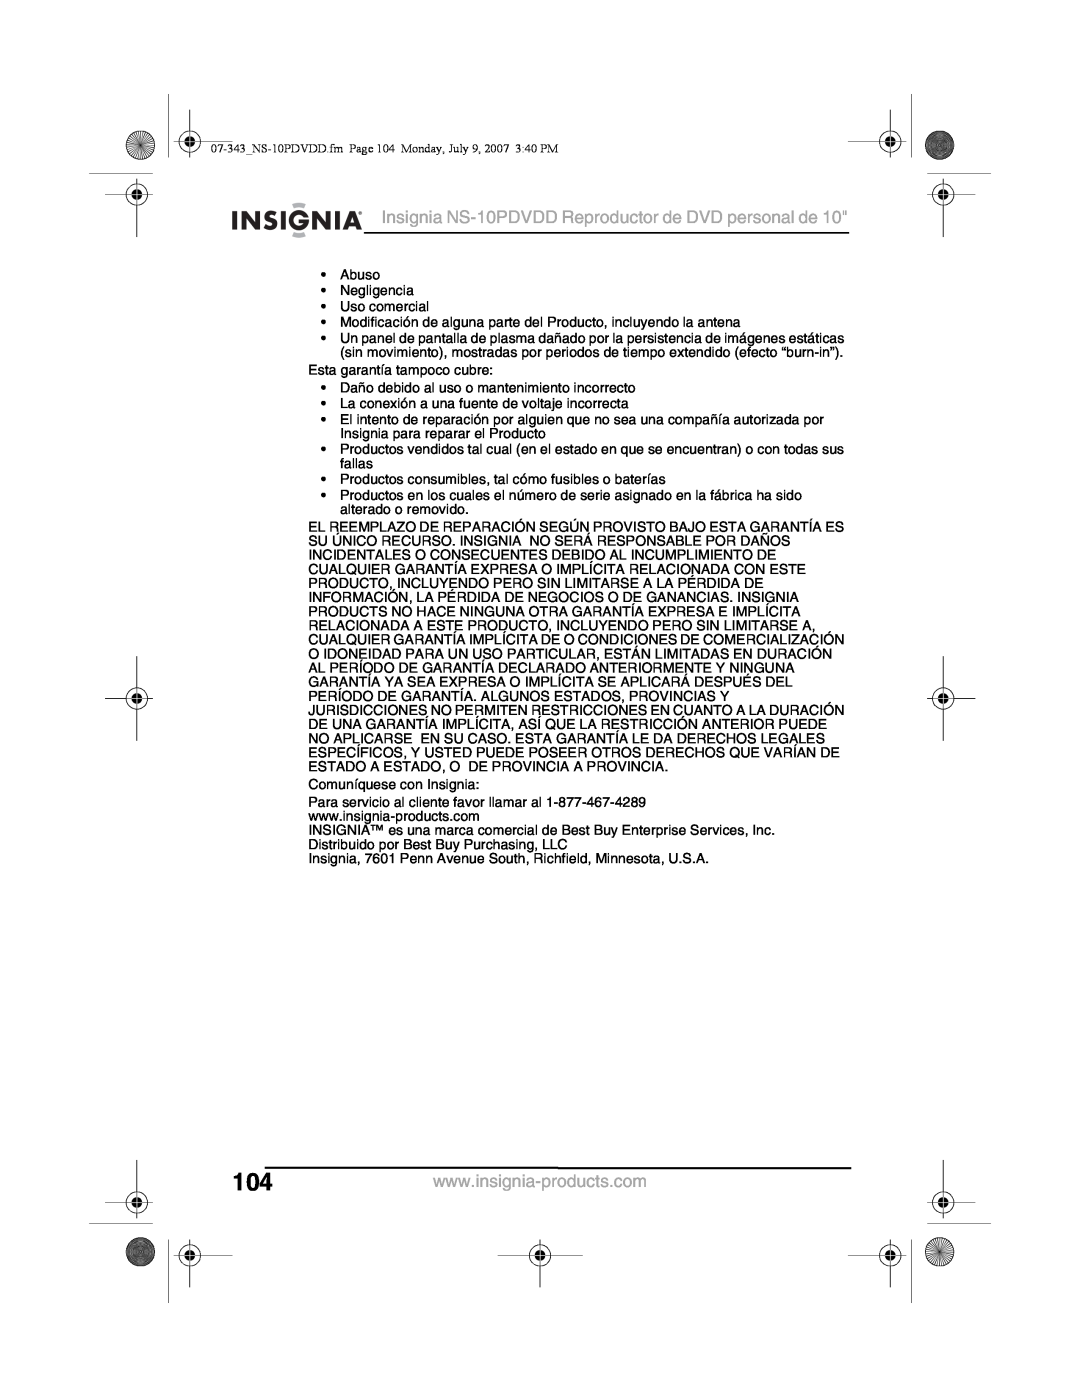 Insignia Insignia NS-10PDVDD Reproductor de DVD personal de, 07-343NS-10PDVDD.fm Page 104 Monday, July 9, 2007 340 PM 